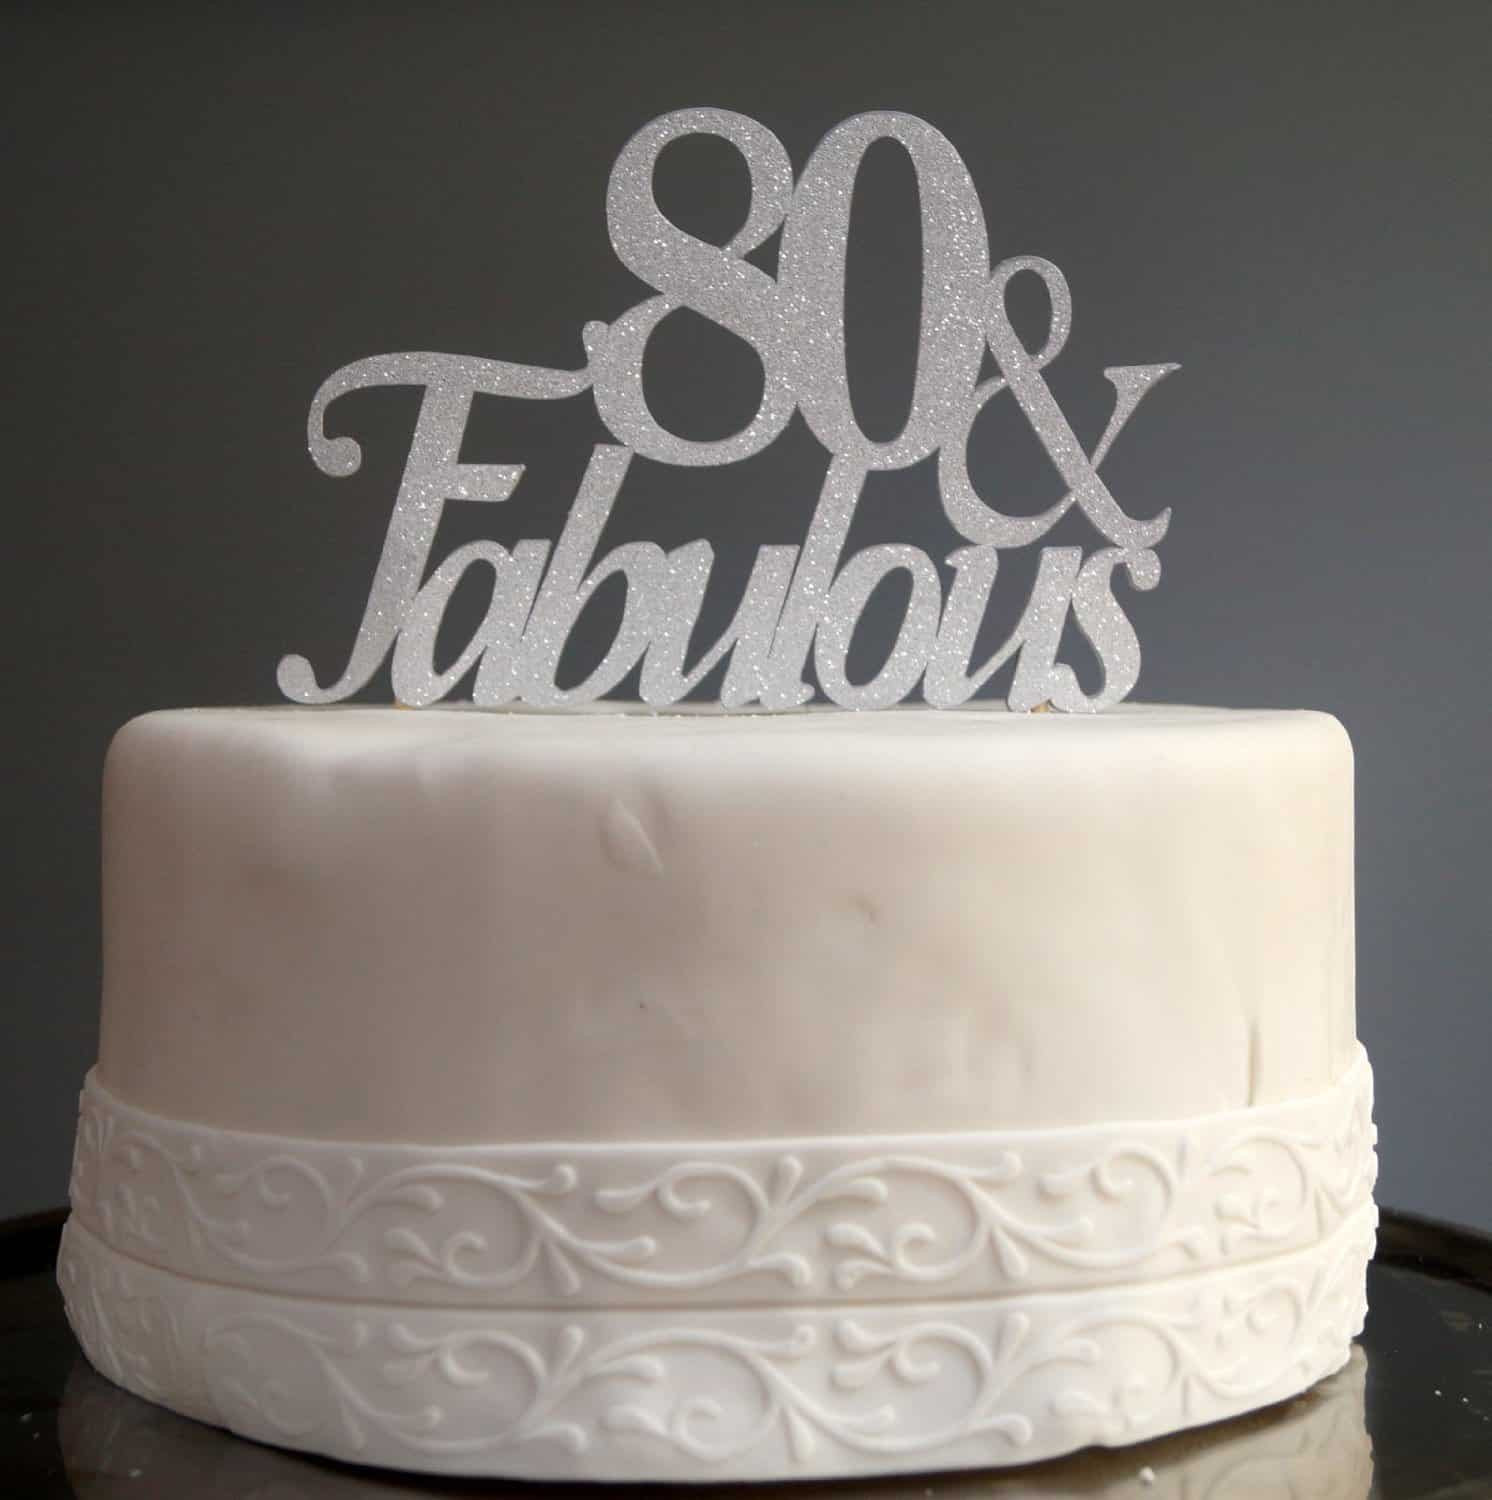 80th Birthday Cake Toppers
 80th Birthday Cakes 80th Birthday Ideas